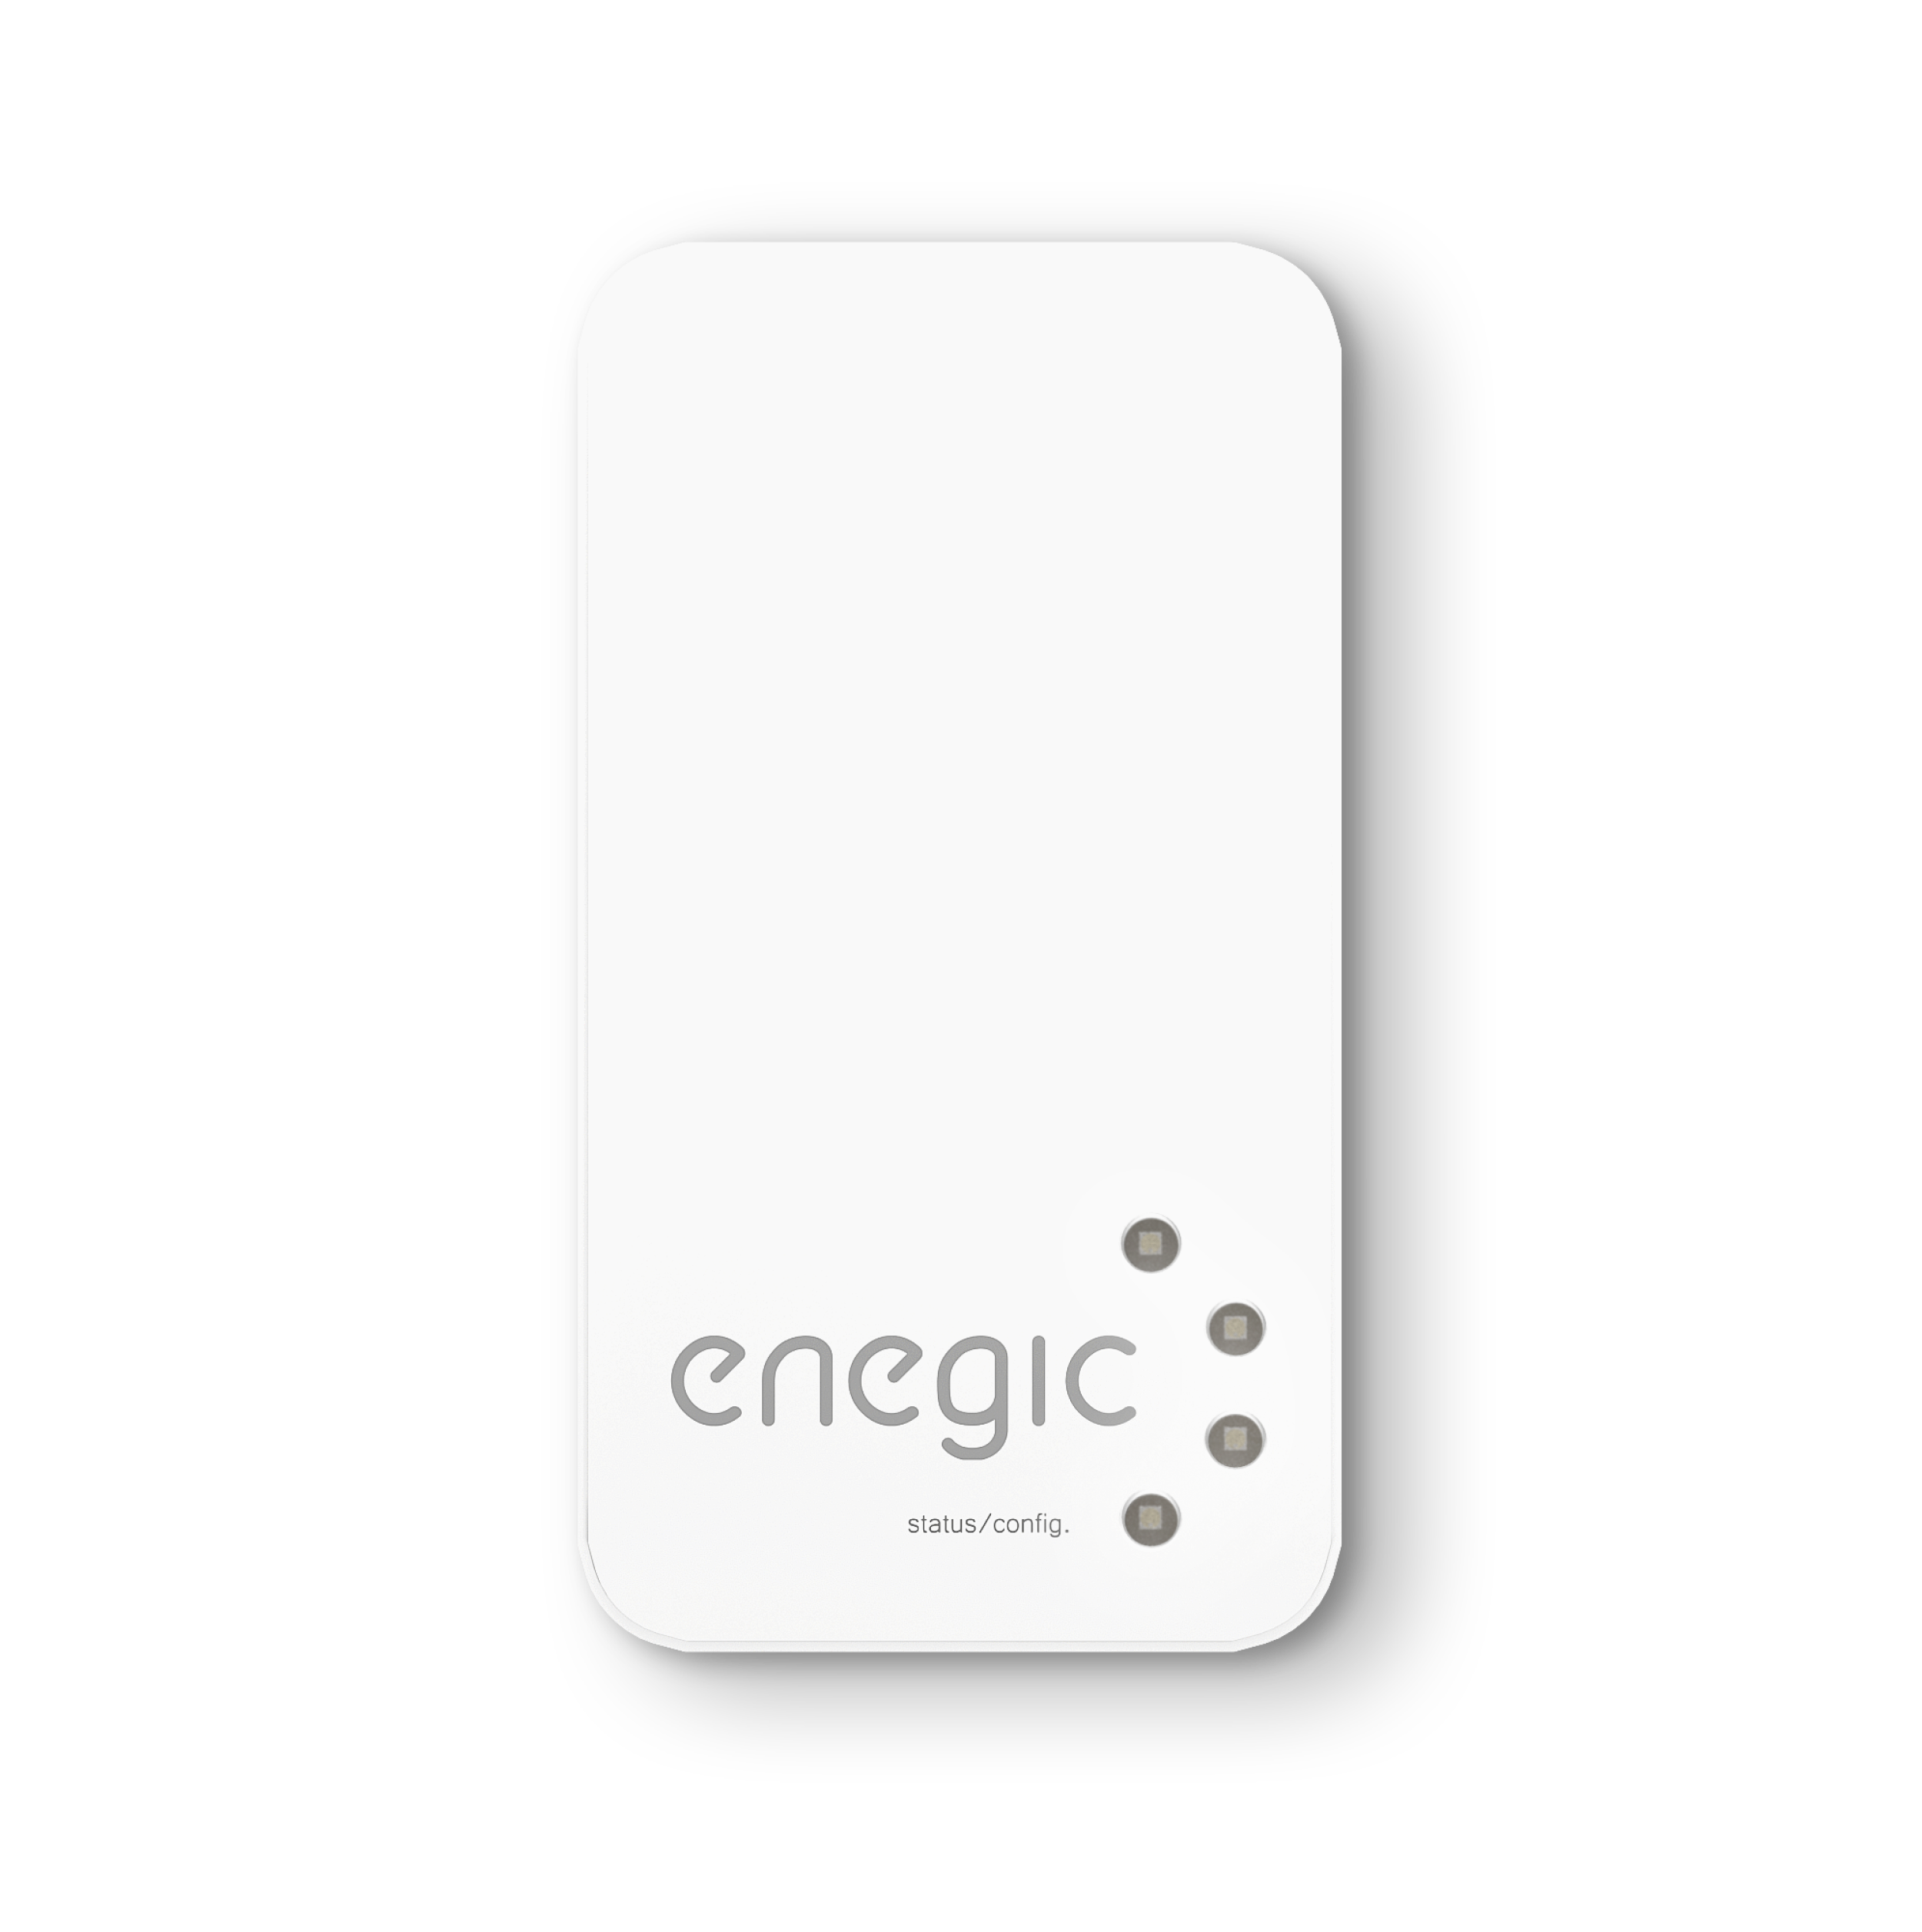 Enegic monitor for power management.